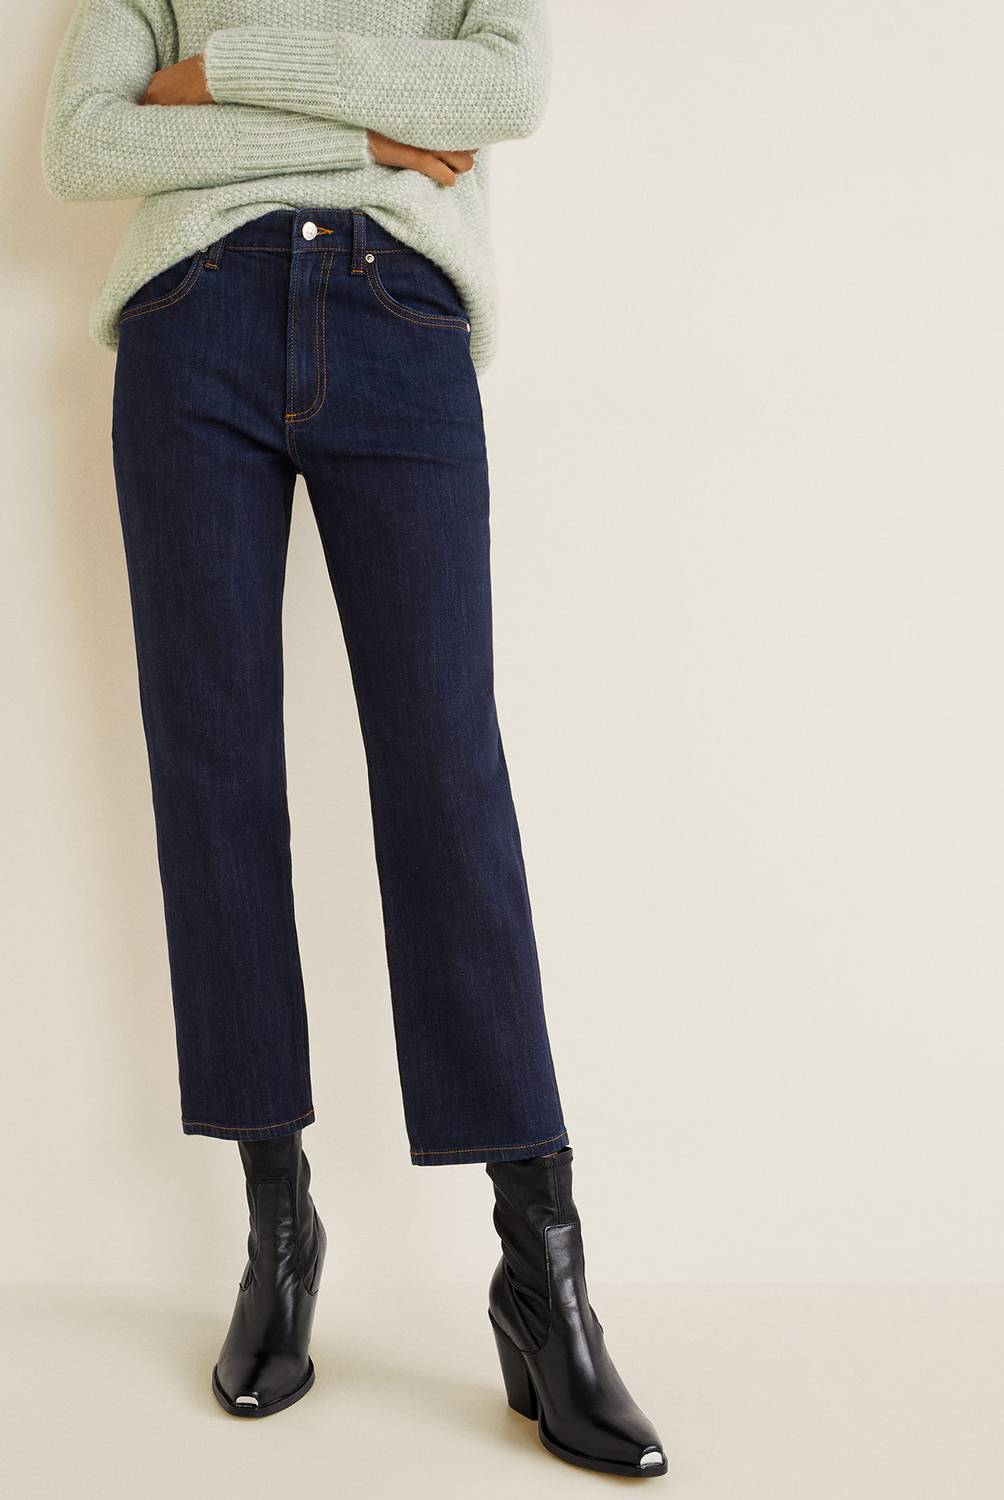 MANGO - Jeans de Algodón Skinny Fit Mujer